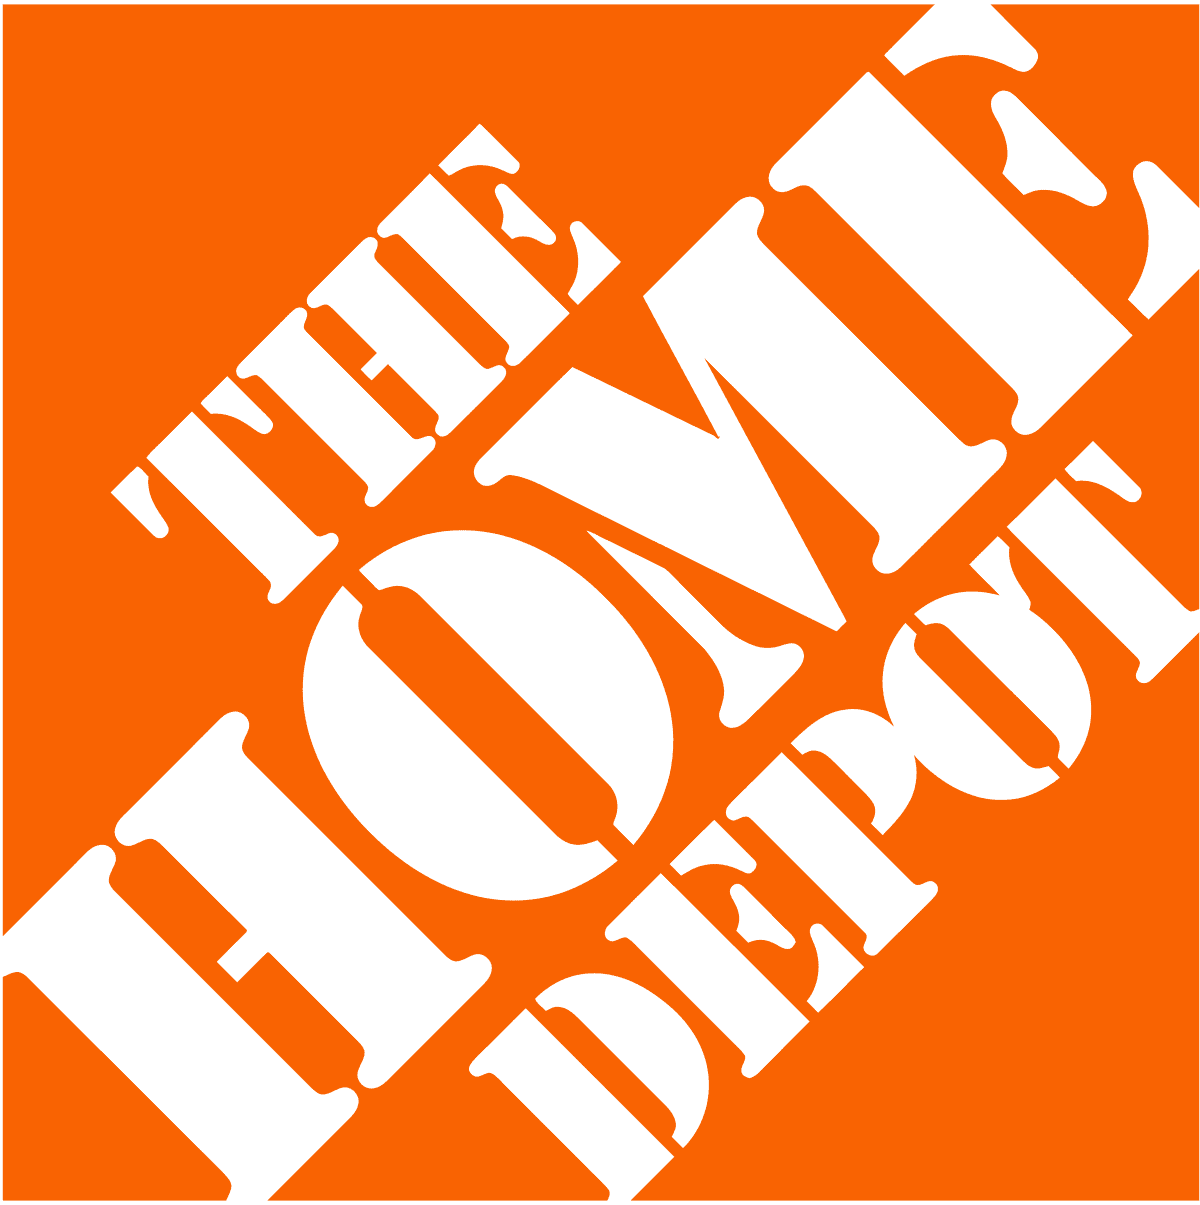 Home Depot Pre-Black Friday Sale on Furniture and Decor #HomeDepotDecor